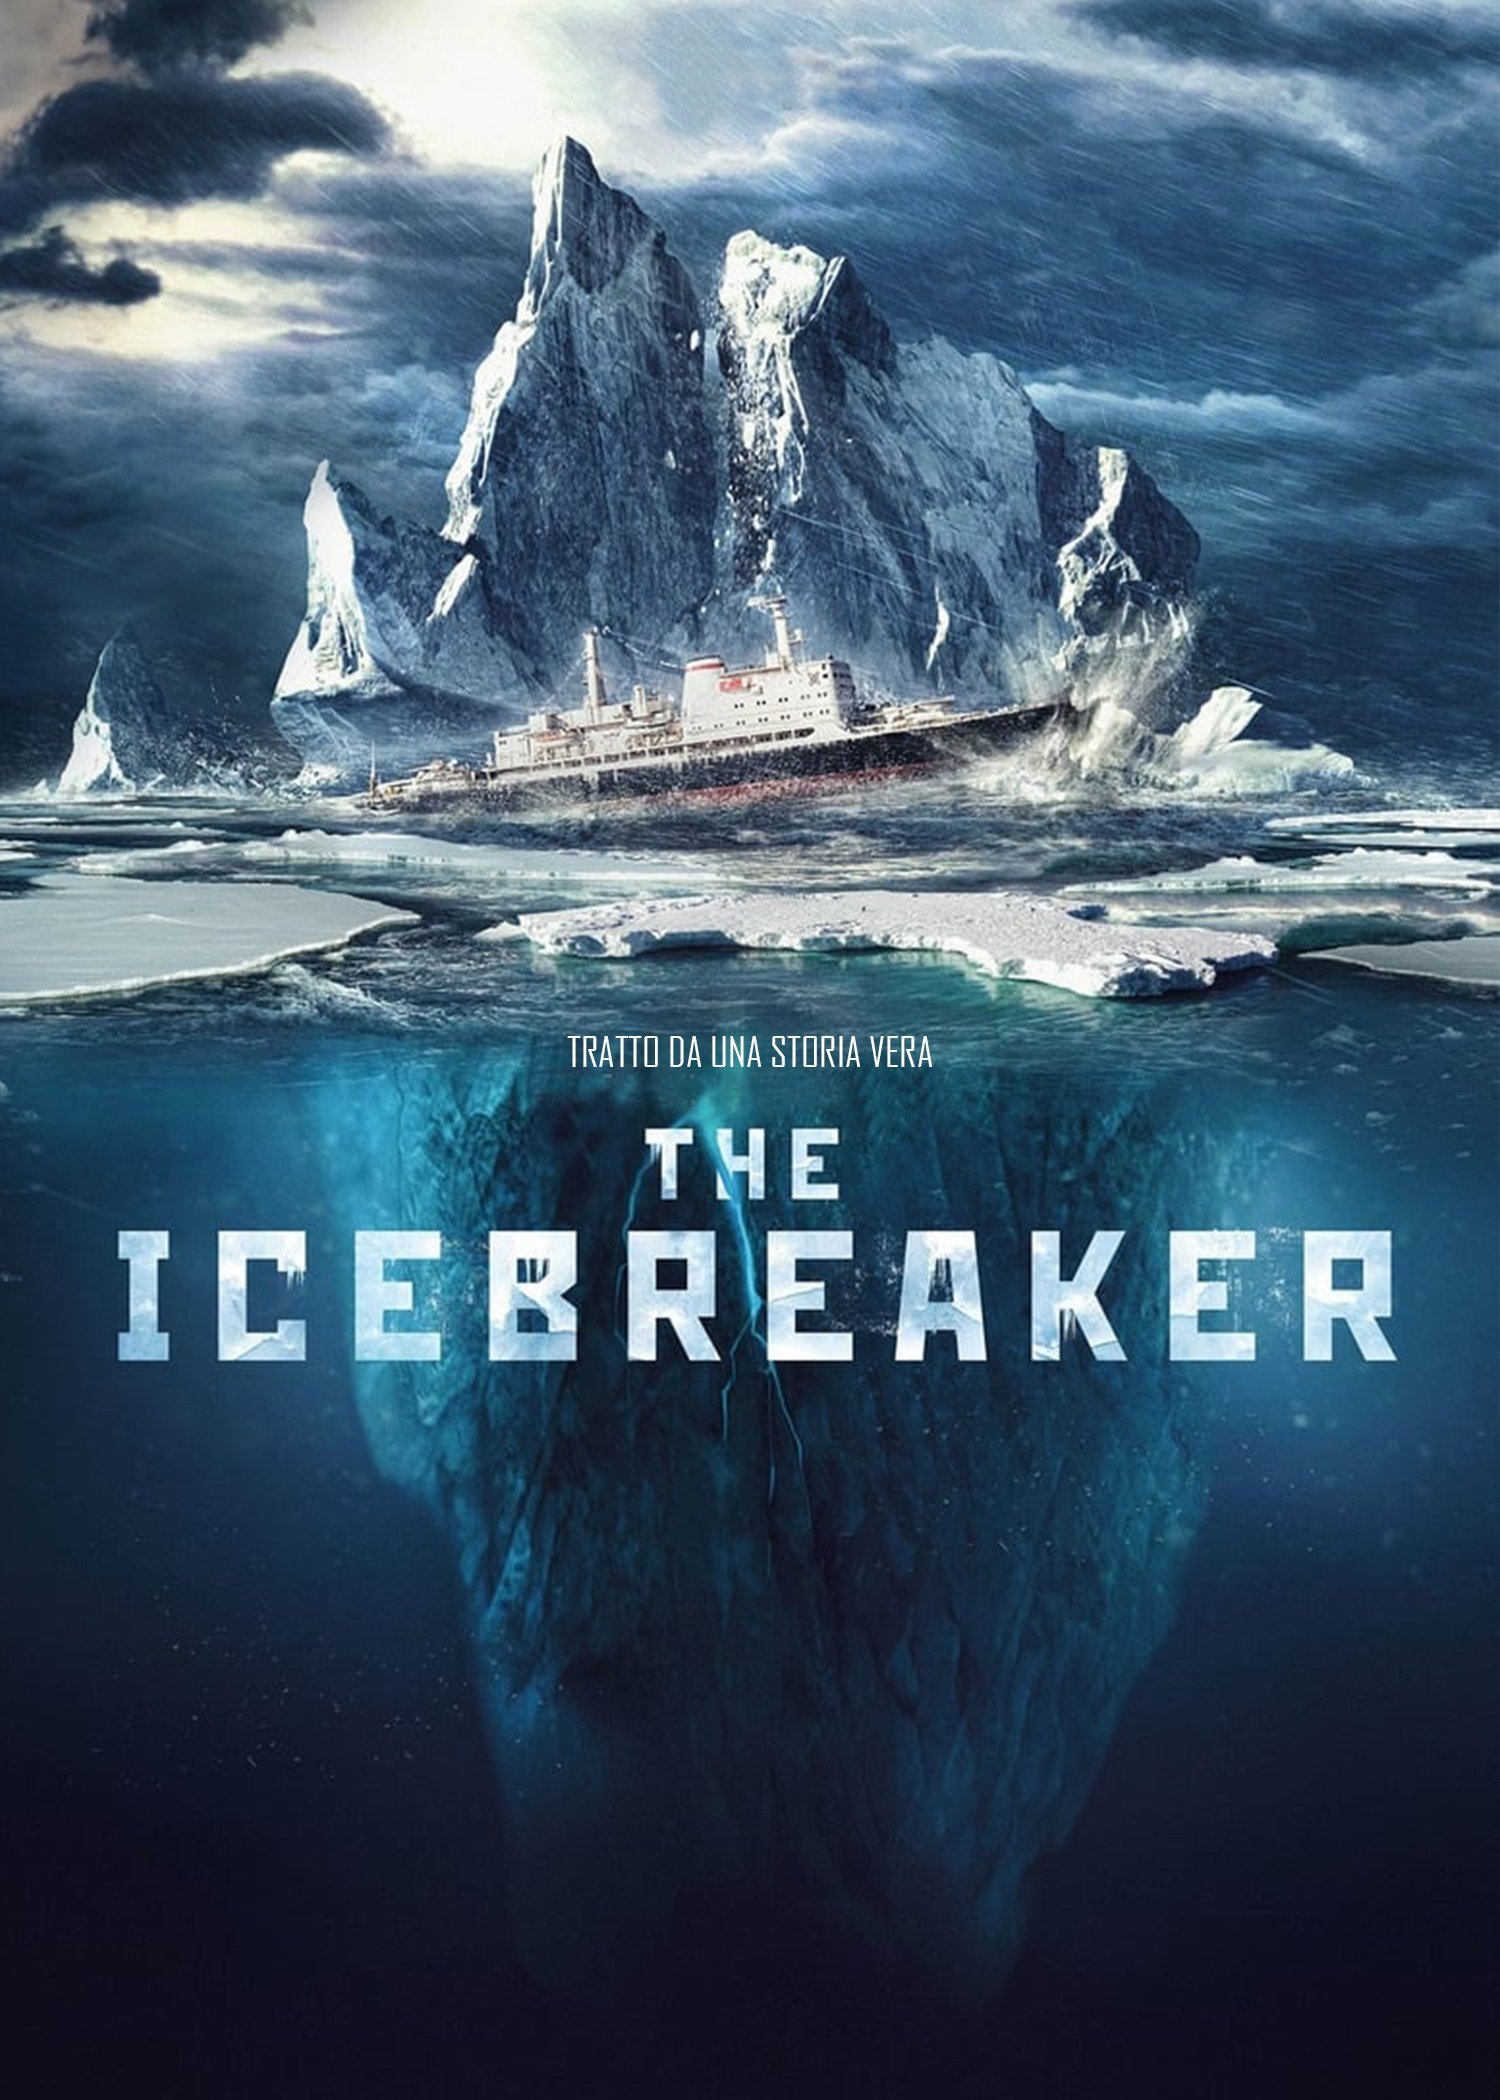 Icebreaker Activities - Create Strategic Thinking